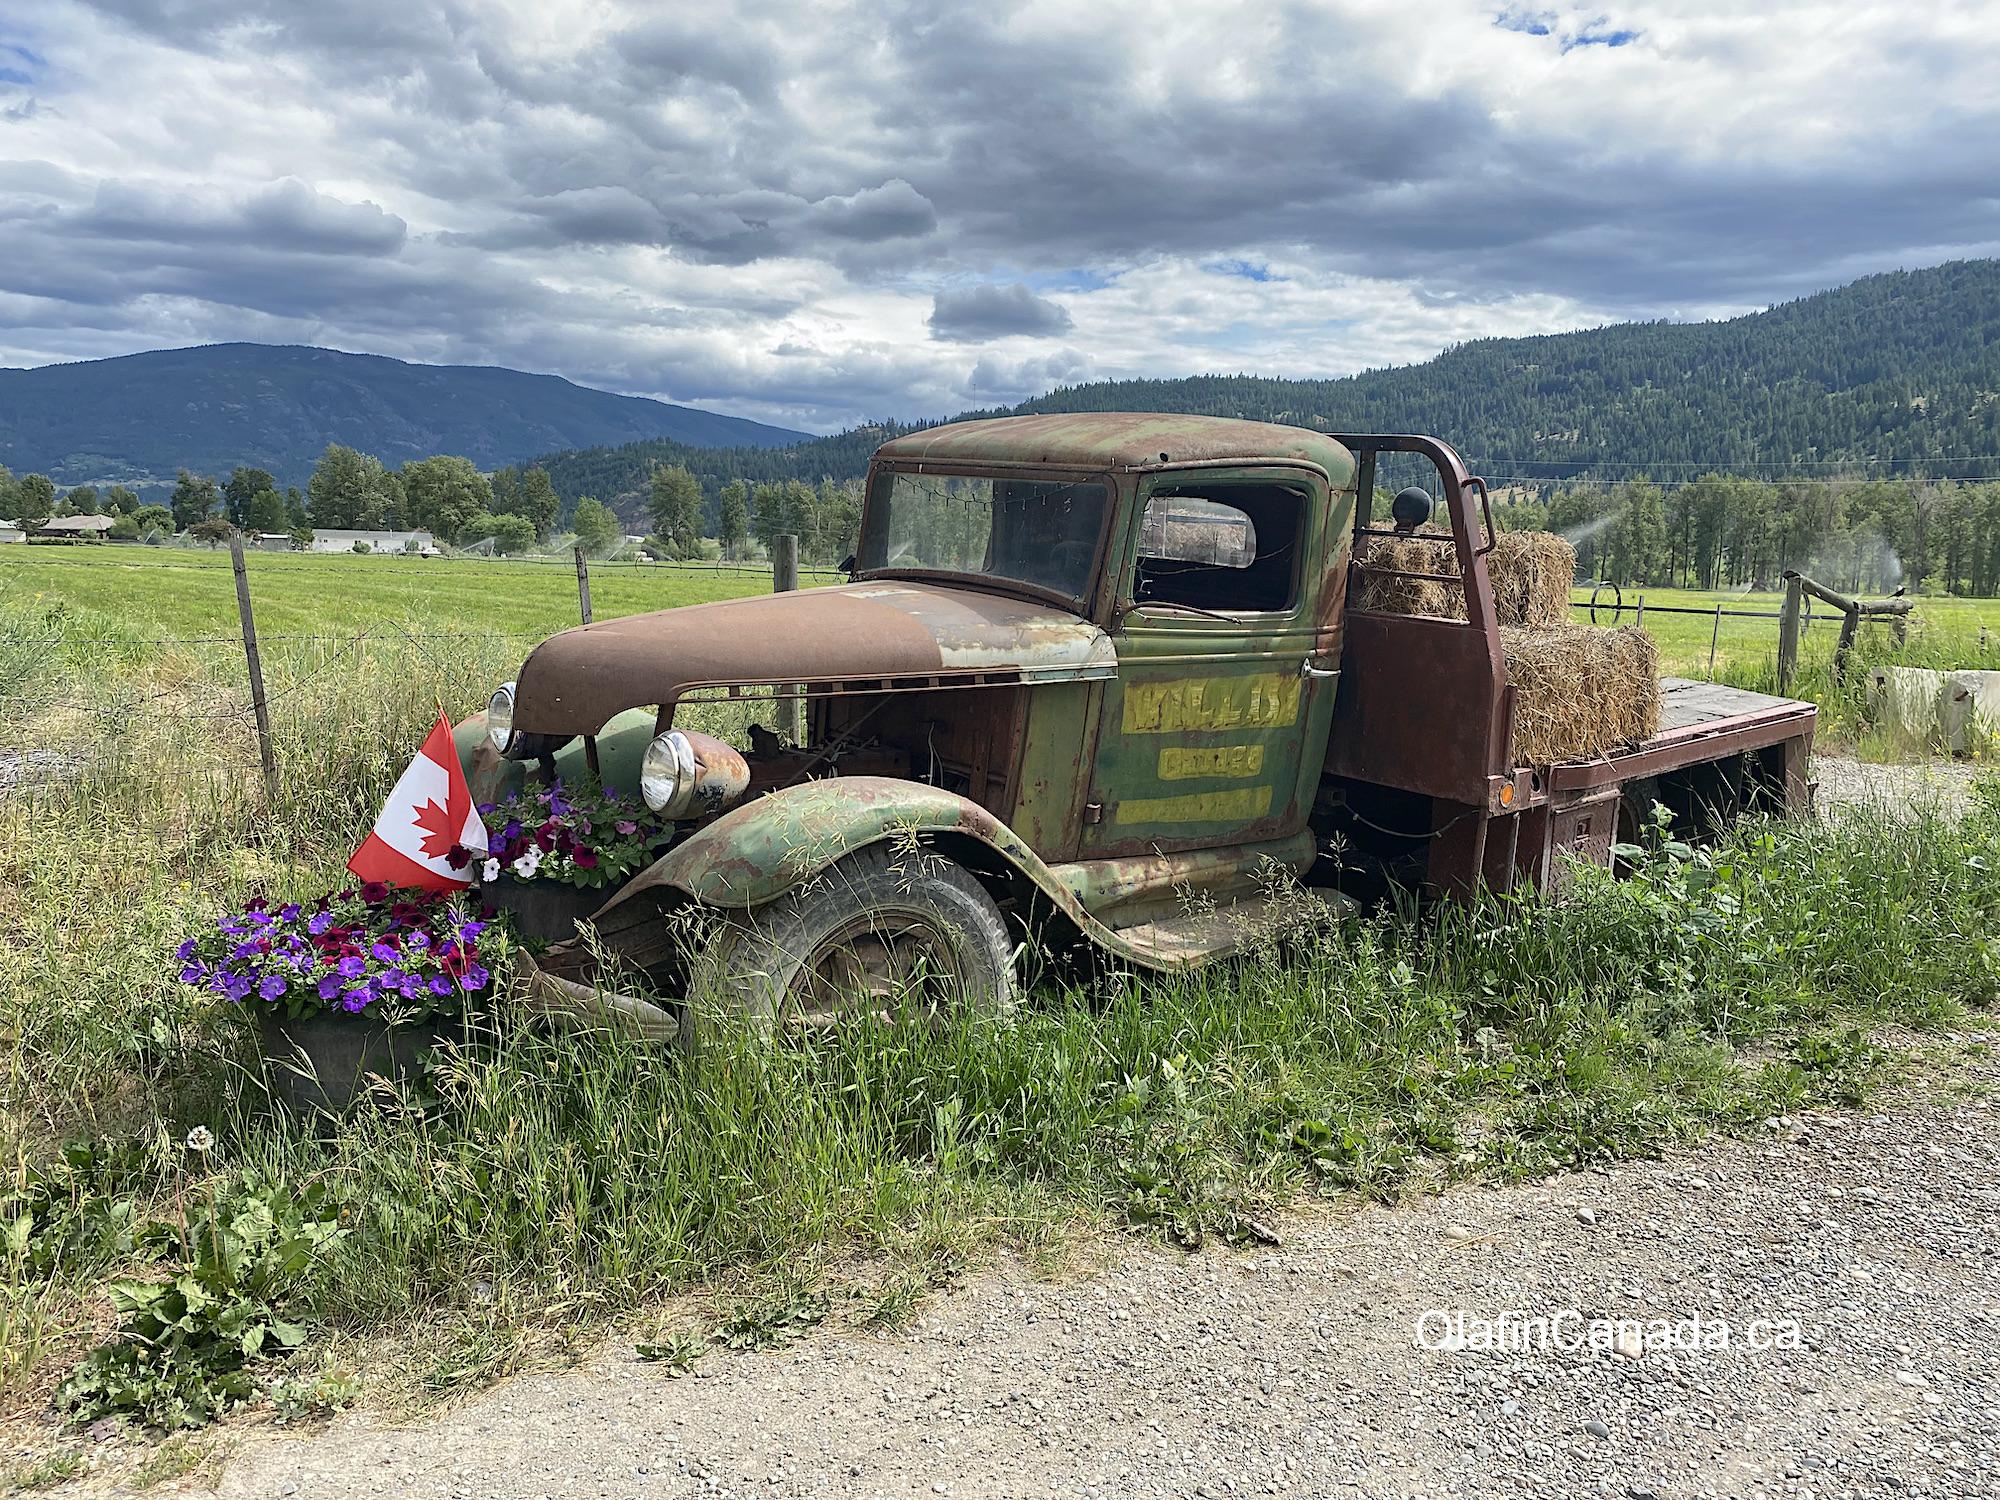 Old truck from the 1930s in Merritt BC #olafincanada #britishcolumbia #discoverbc #abandonedbc #merritt #truck